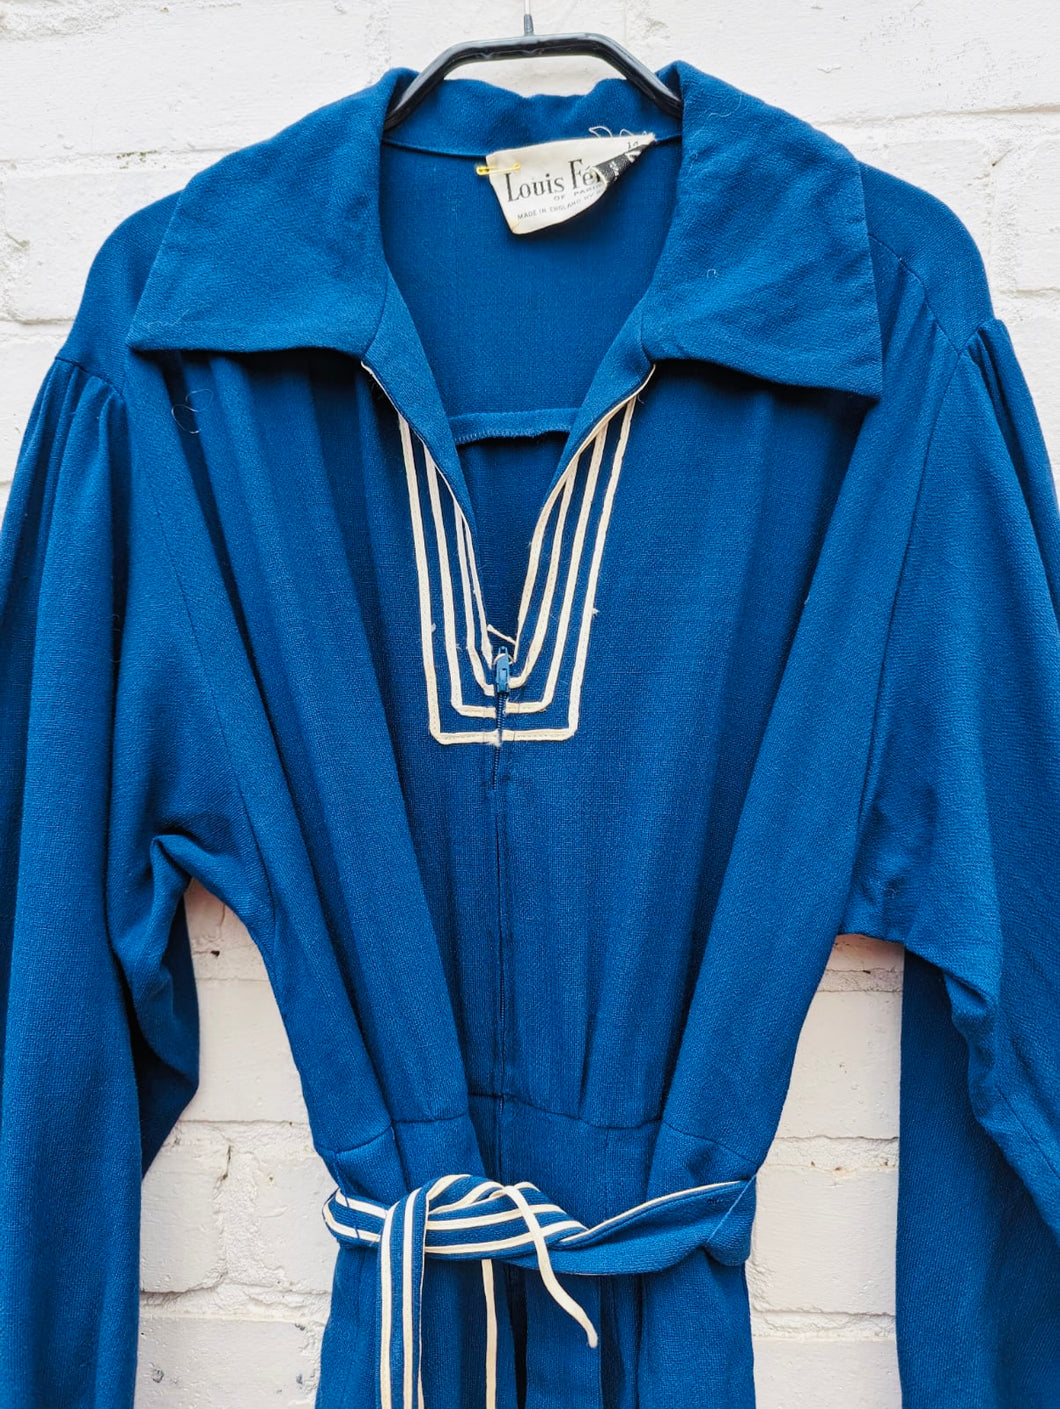 1950s designer Louis Feraud blue sailor dress with belt